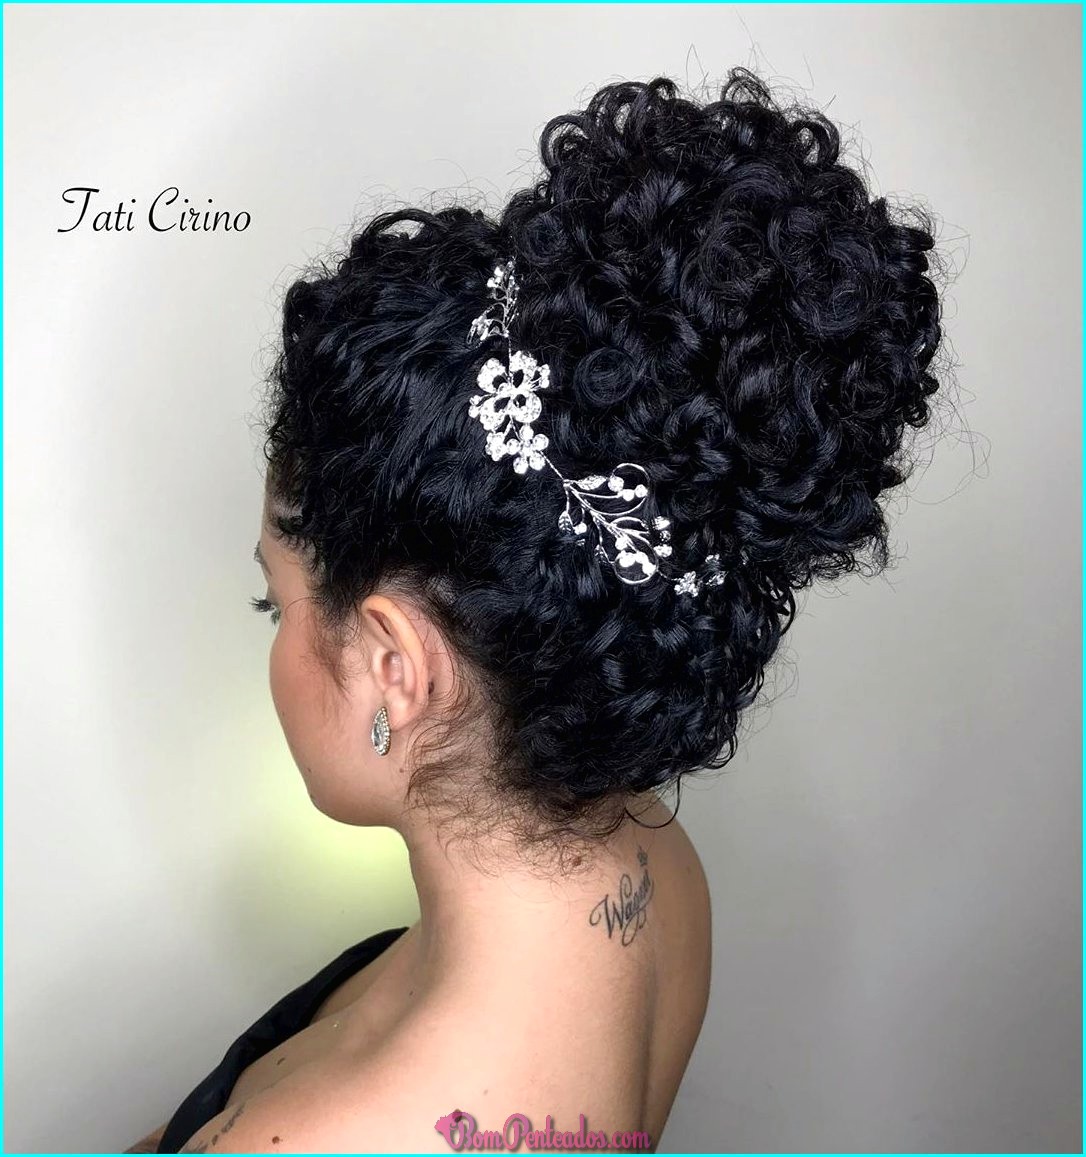 Curly penteado 2021 mulher